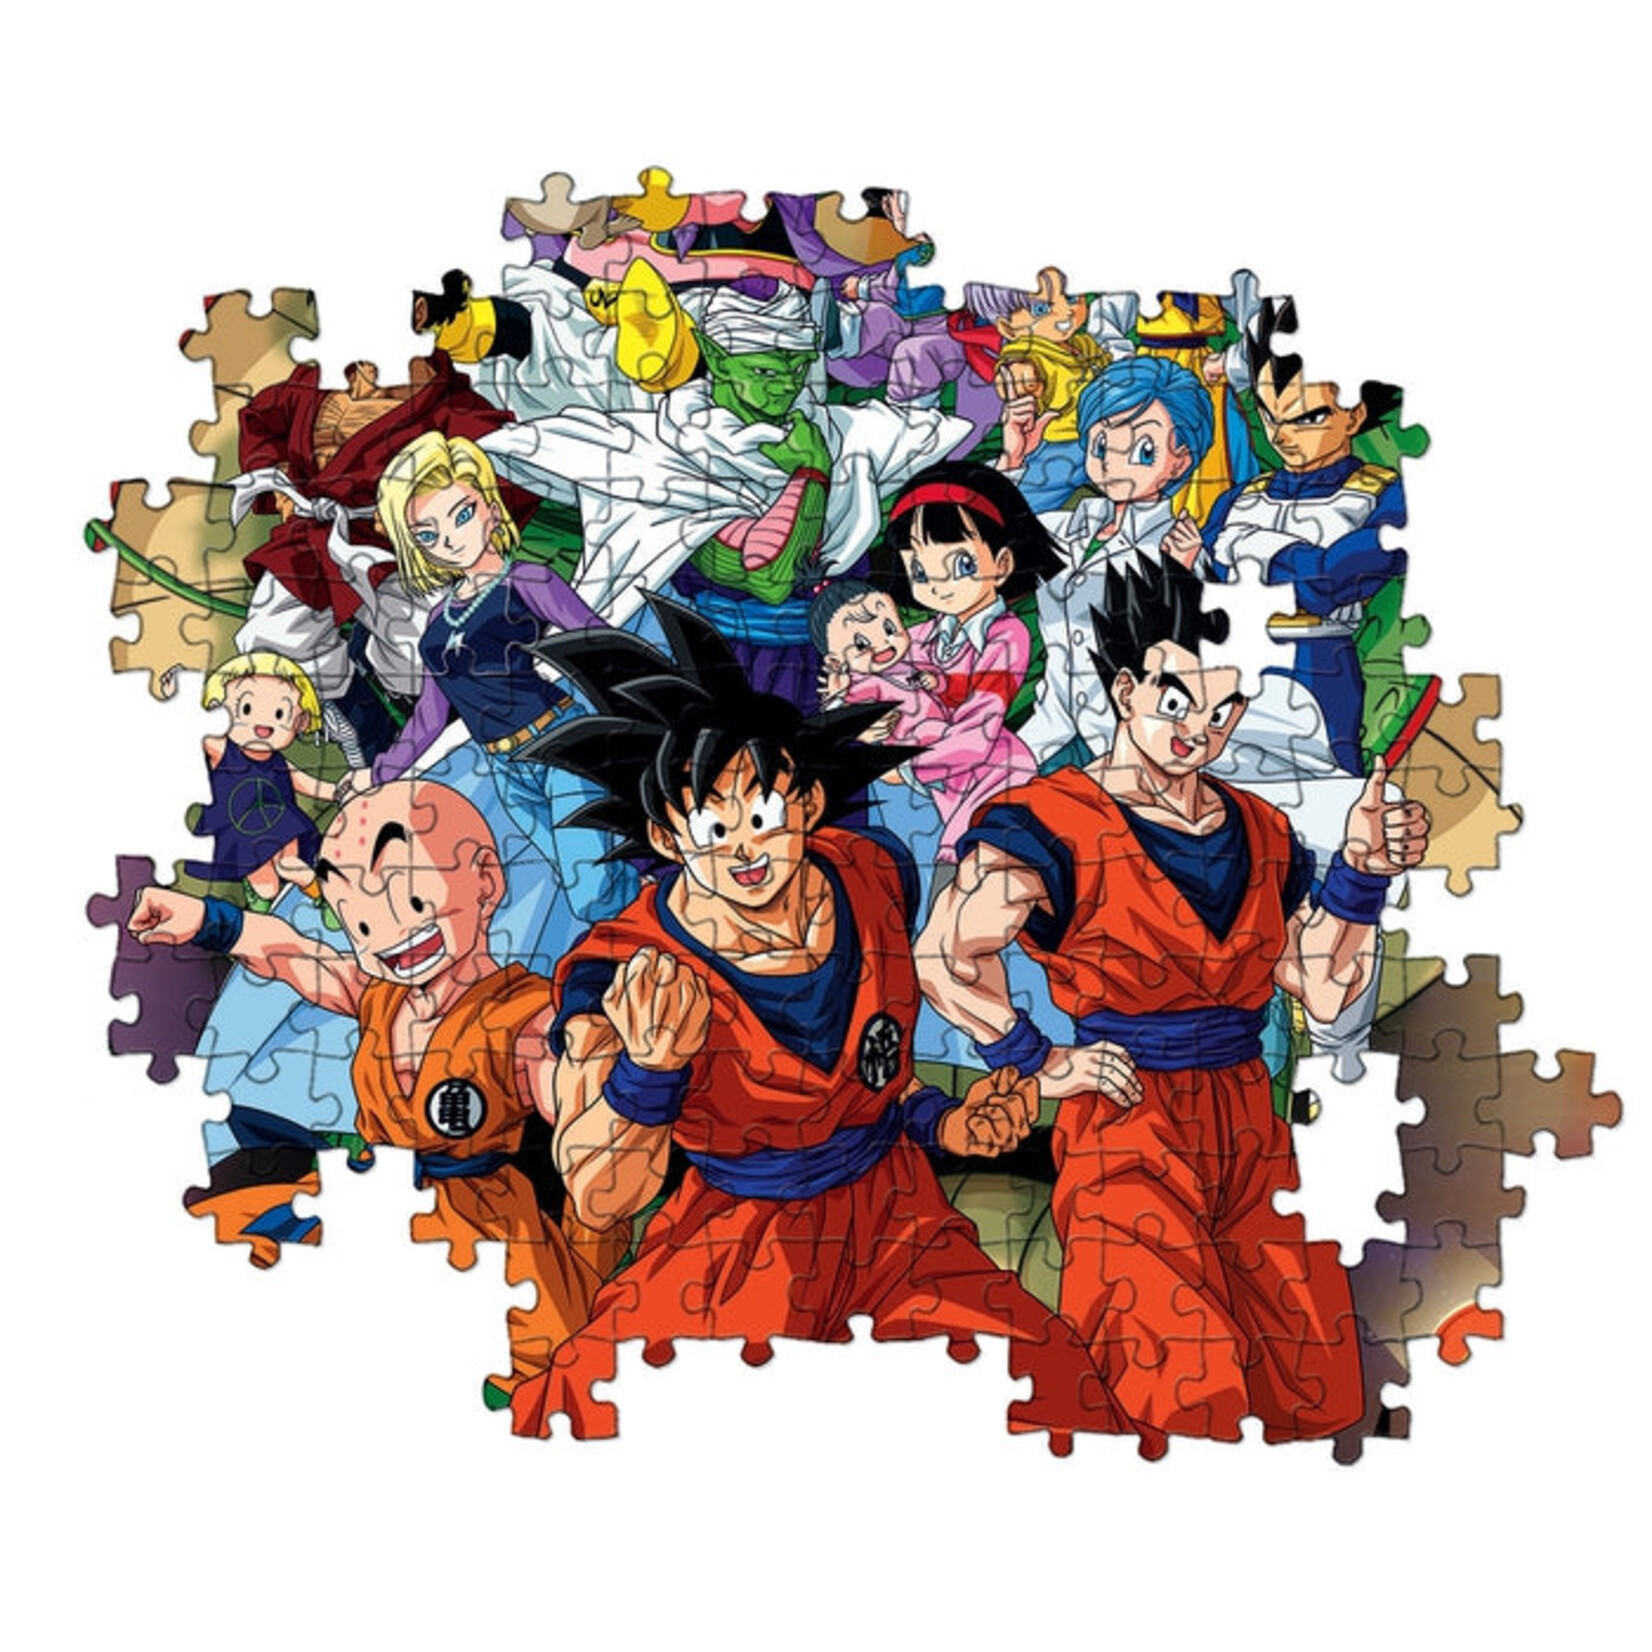 Clementoni Clementoni Dragon Ball Super Puzzle Characters 1000 pcs